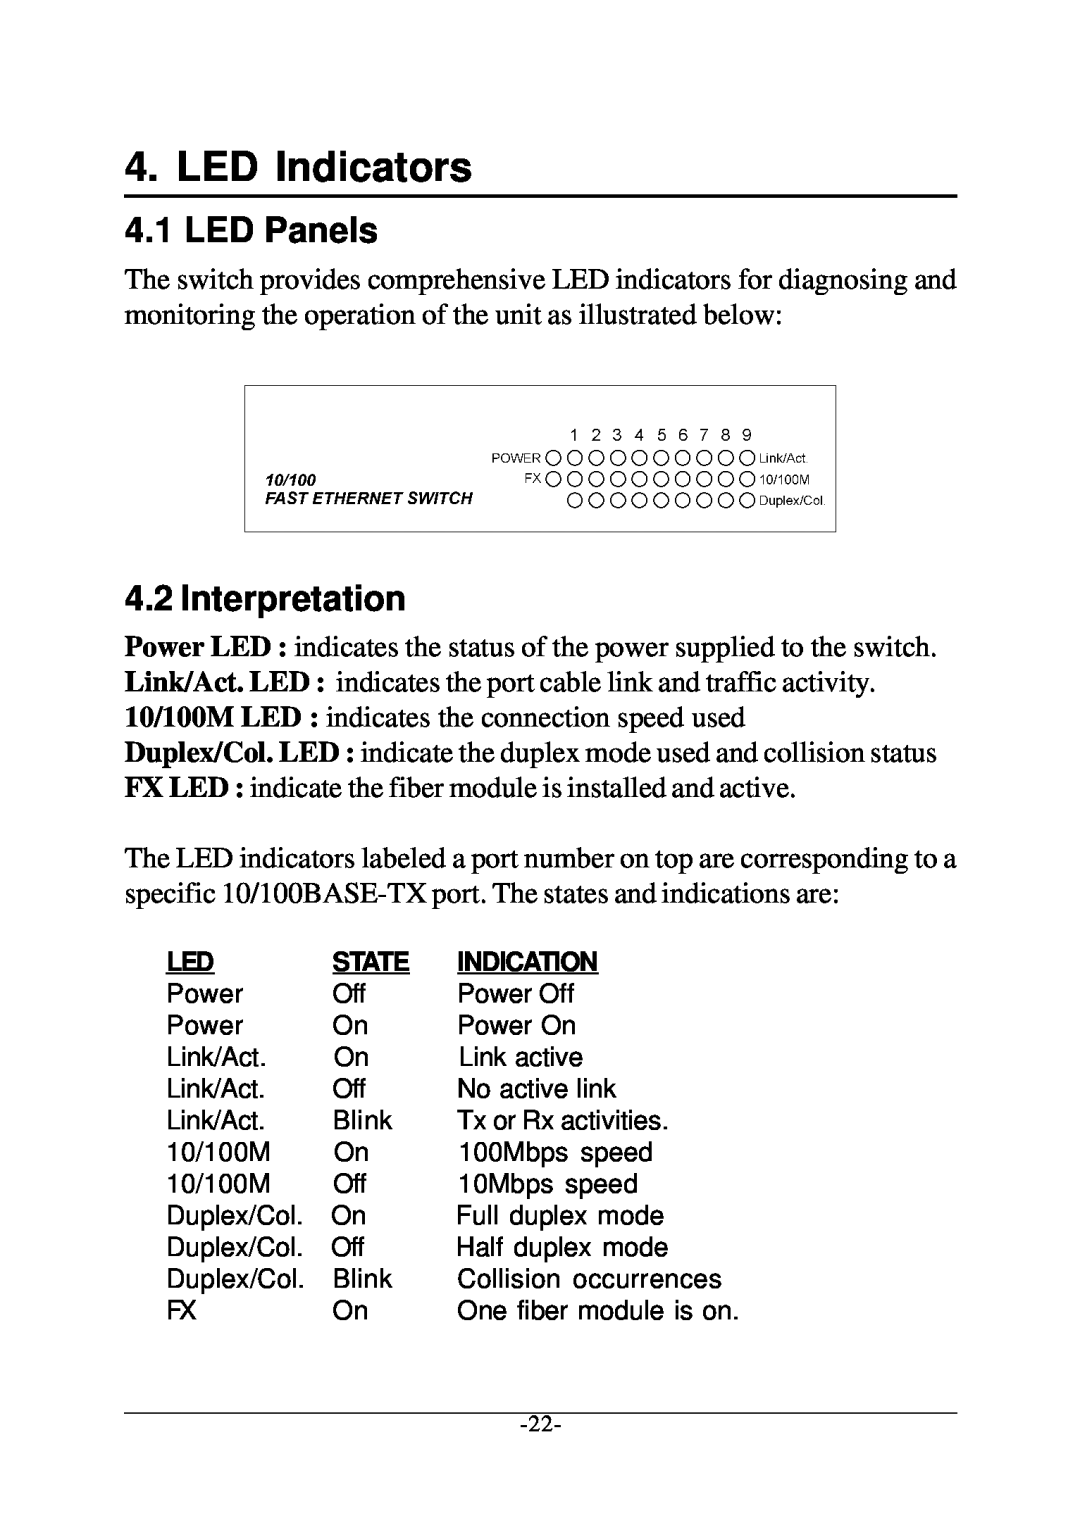 Xerox KS-801 operation manual LED Indicators, LED Panels, Interpretation 